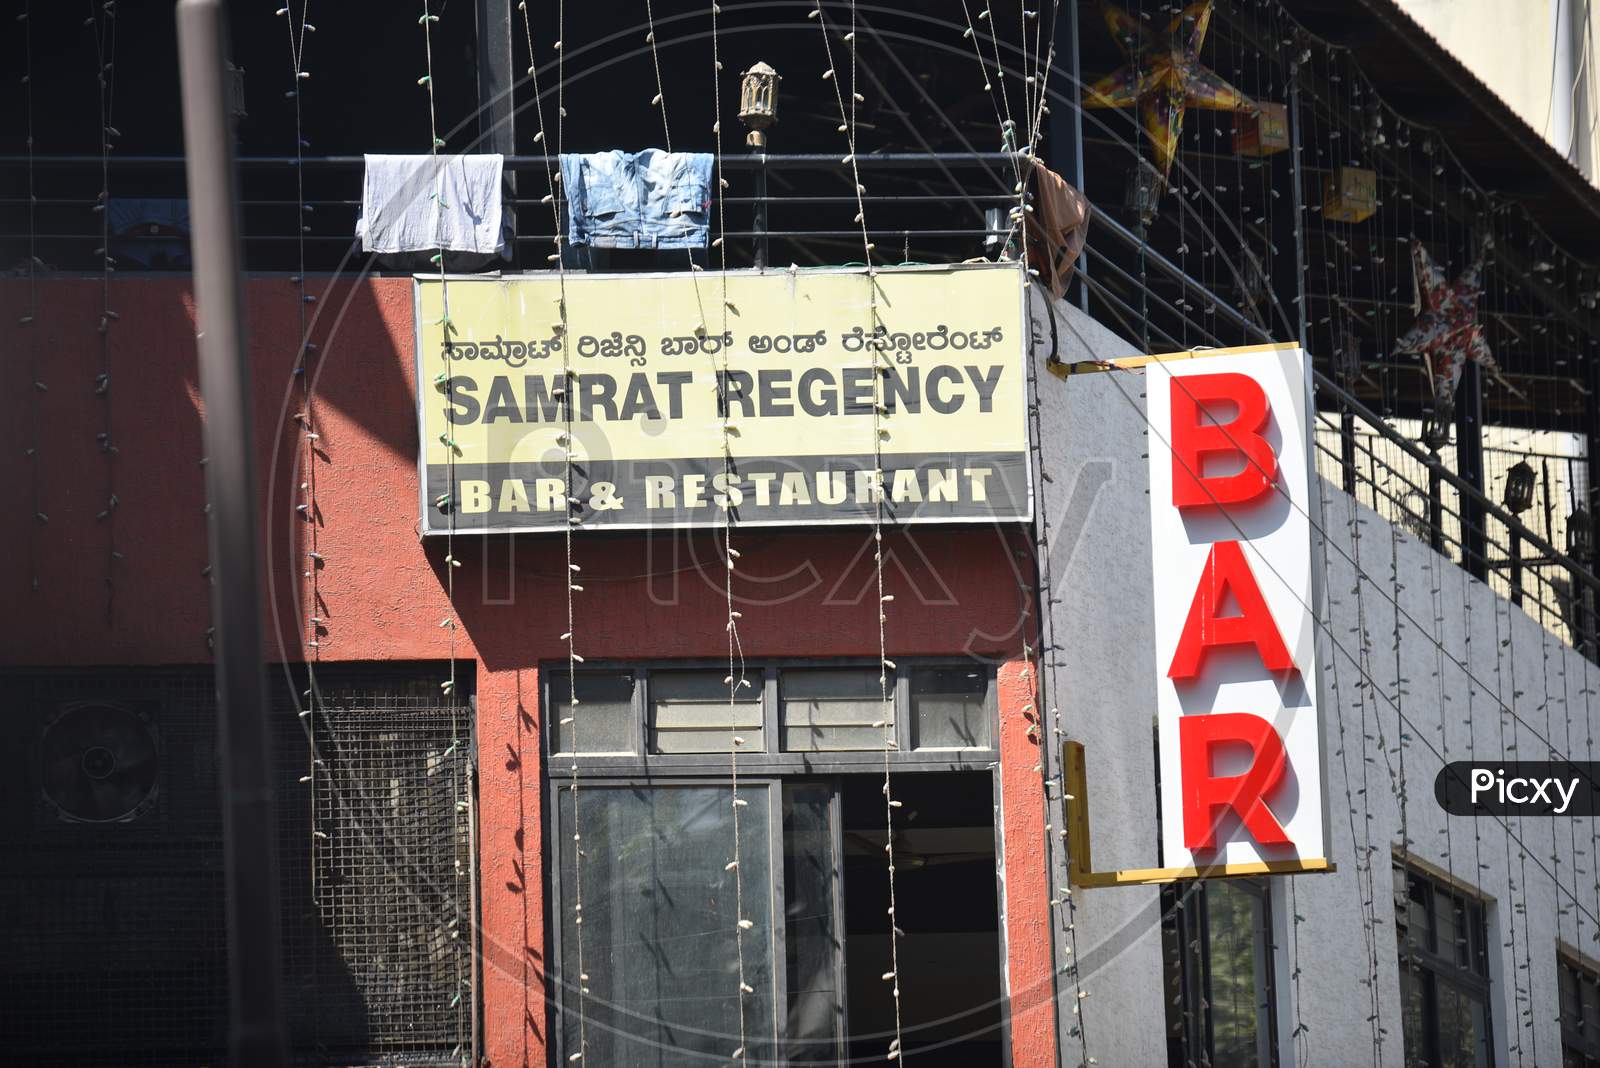 Samrat regency Bar and Restaurant